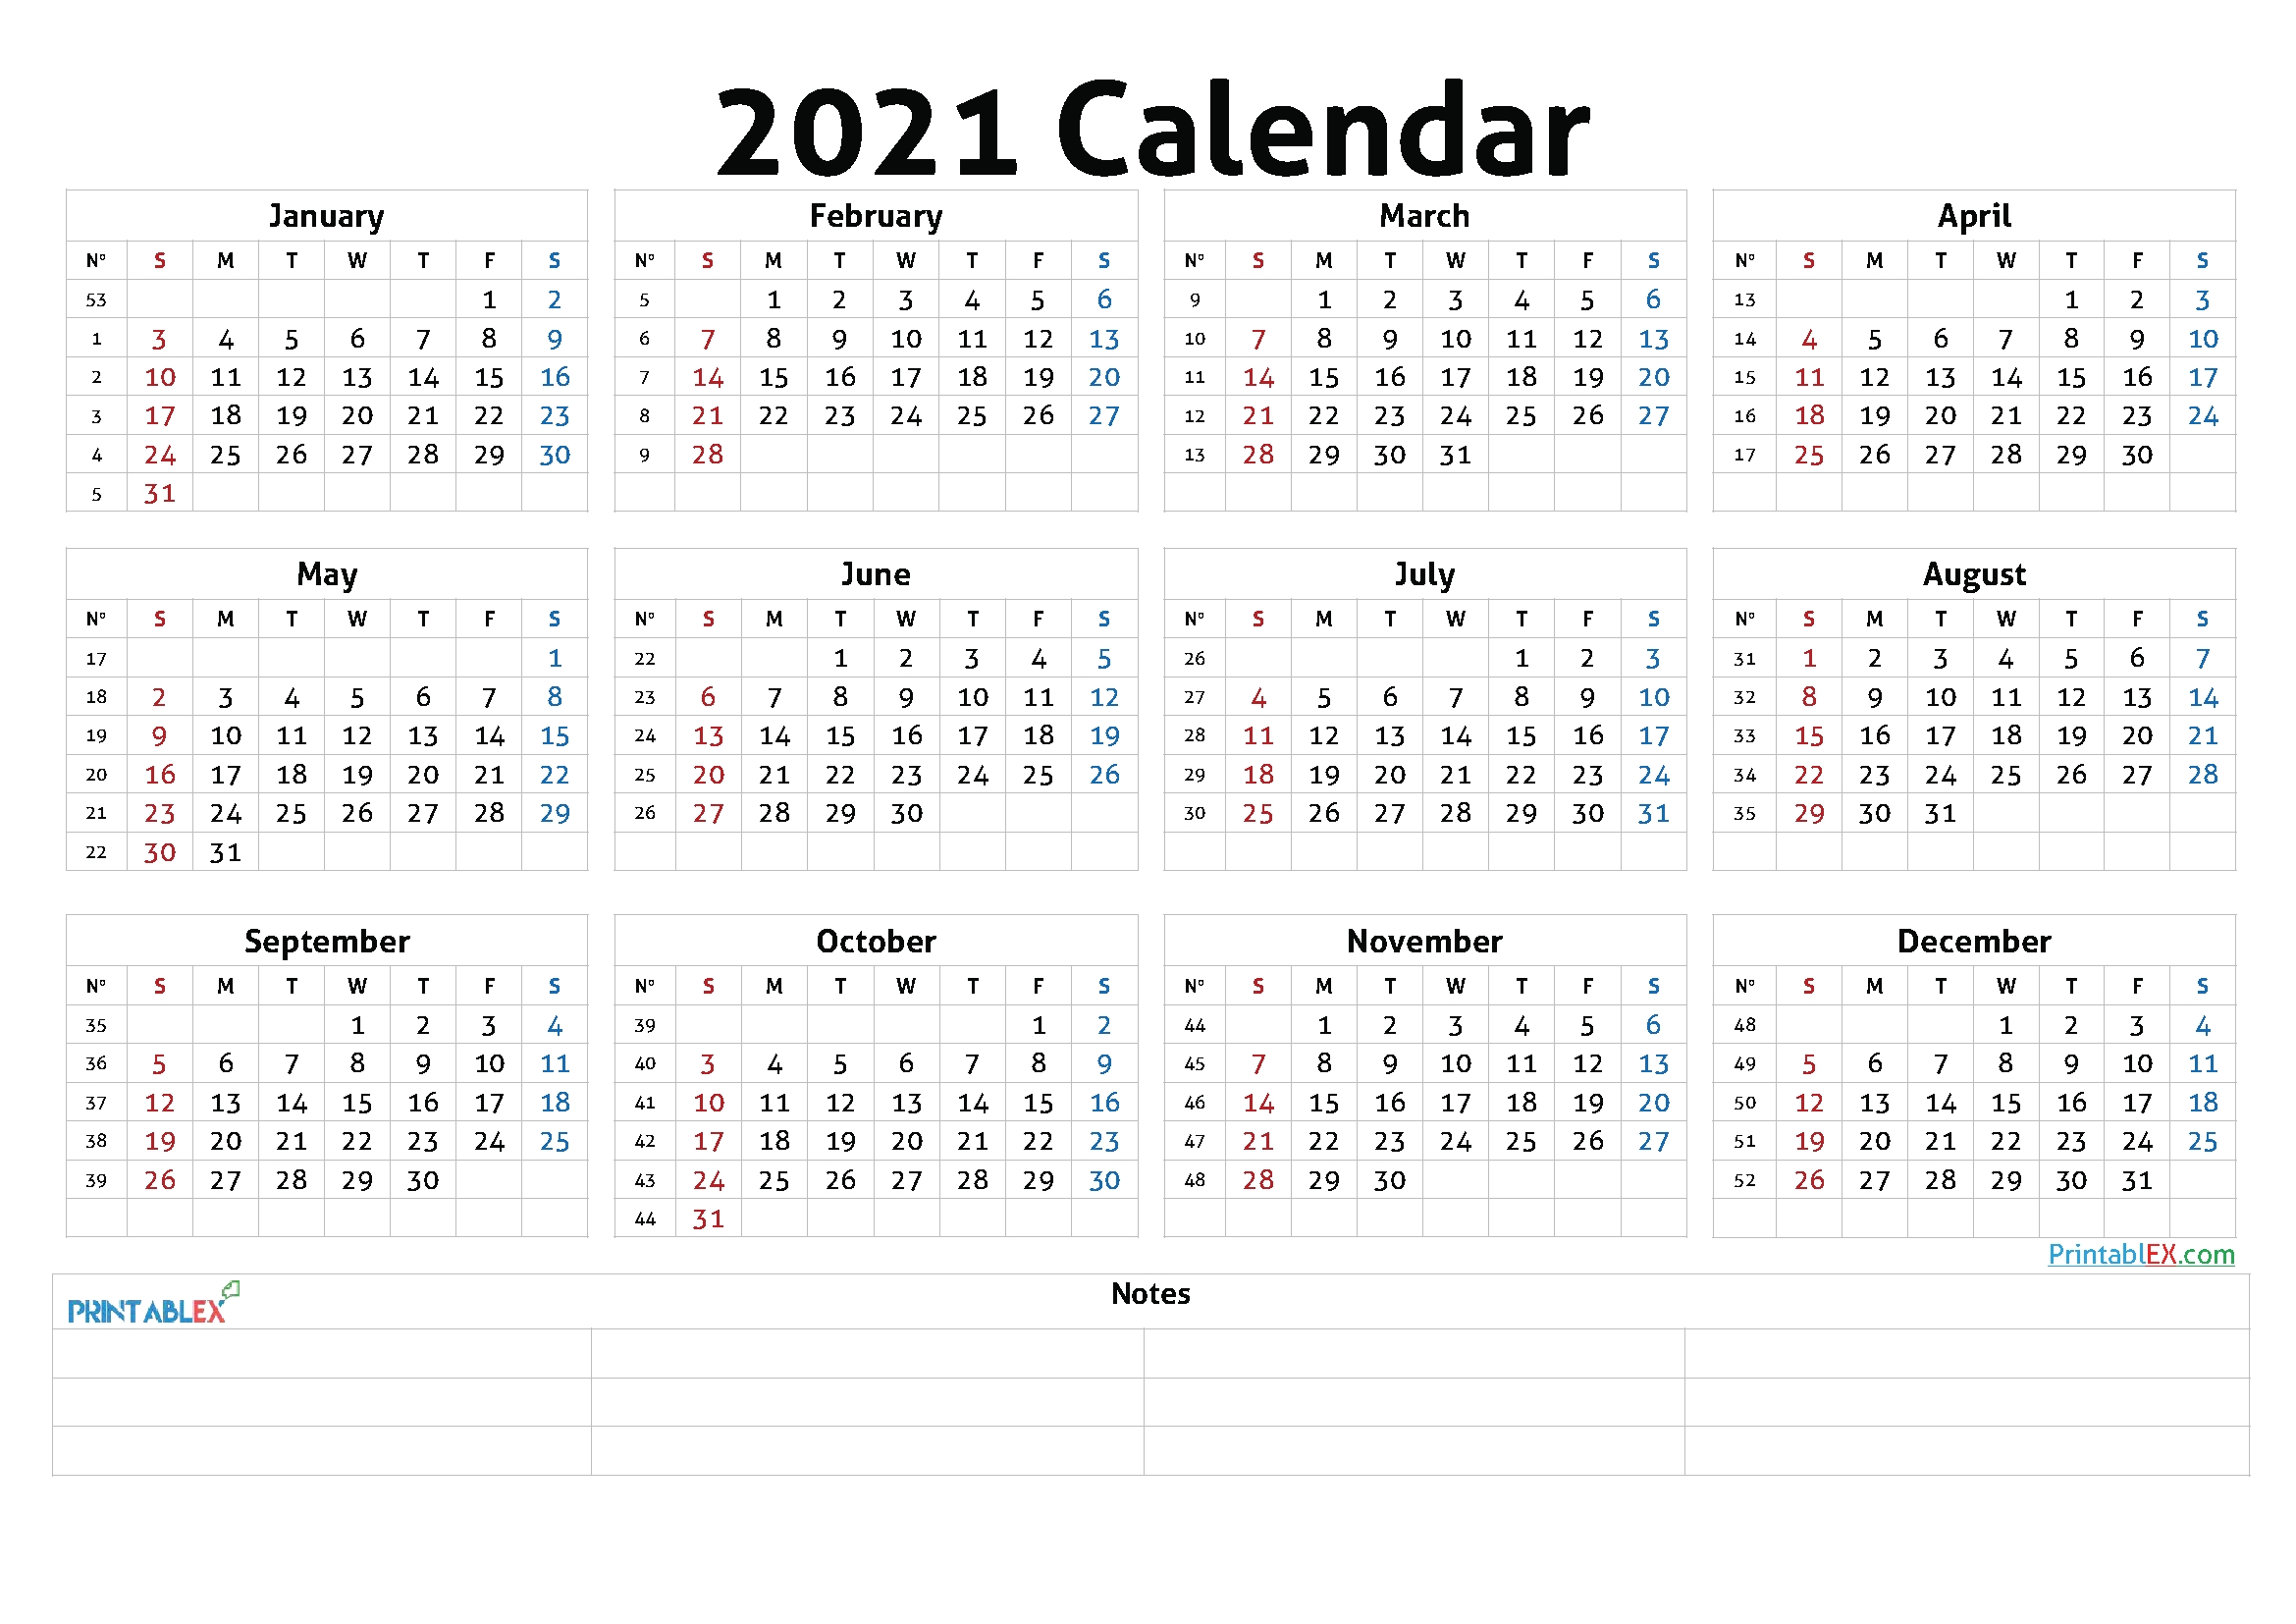 printable 2021 calendaryear 21ytw46